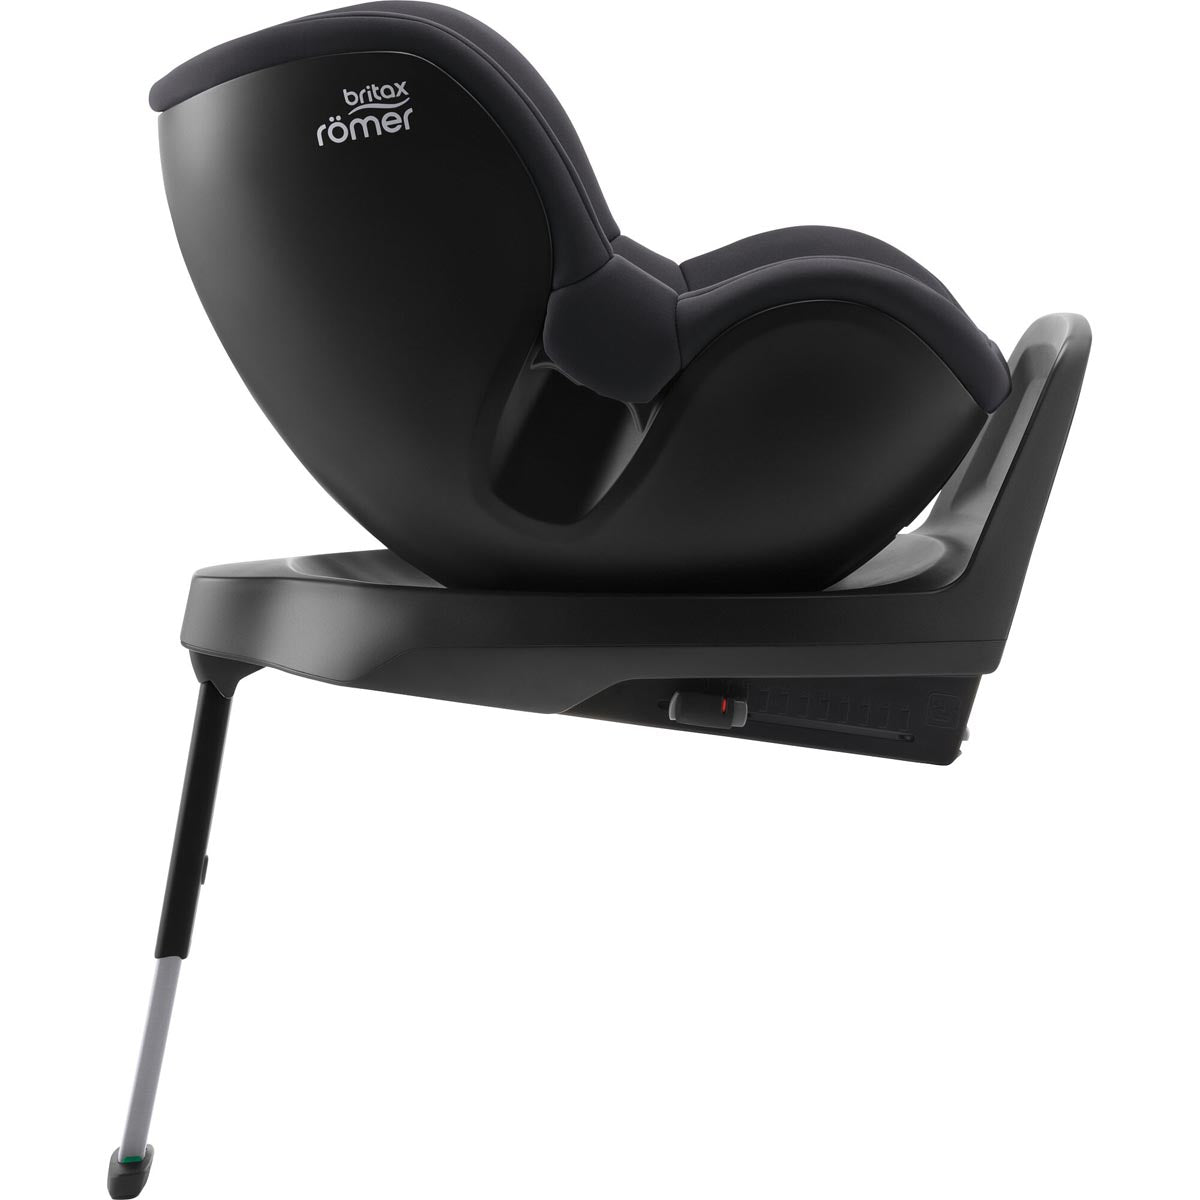 Britax Roemer Dualfix Plus 汽車座椅 (R129 I-size) (初生至4歲) (產地中國)